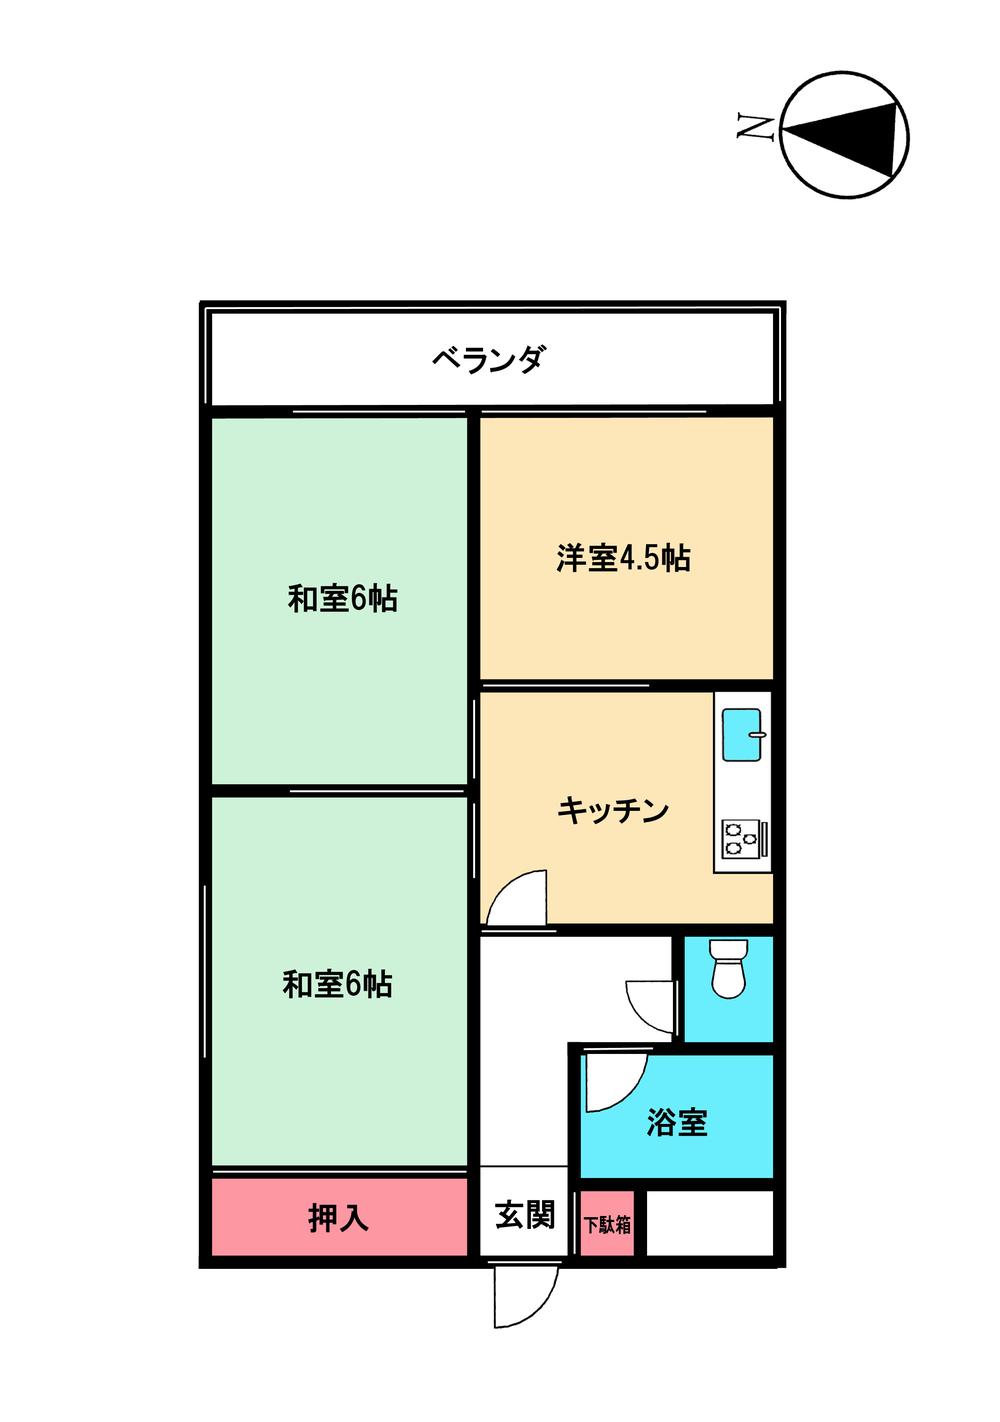 Floor plan. 3K, Price 10.5 million yen, Occupied area 40.16 sq m